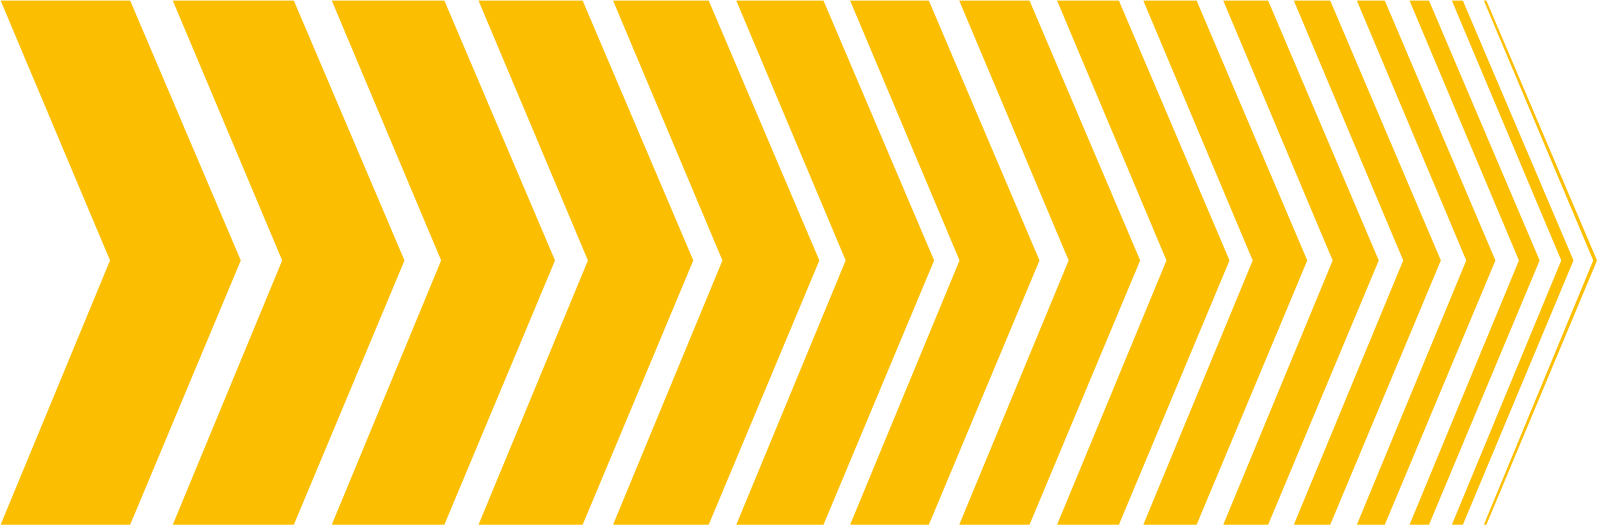 clipart zebra road